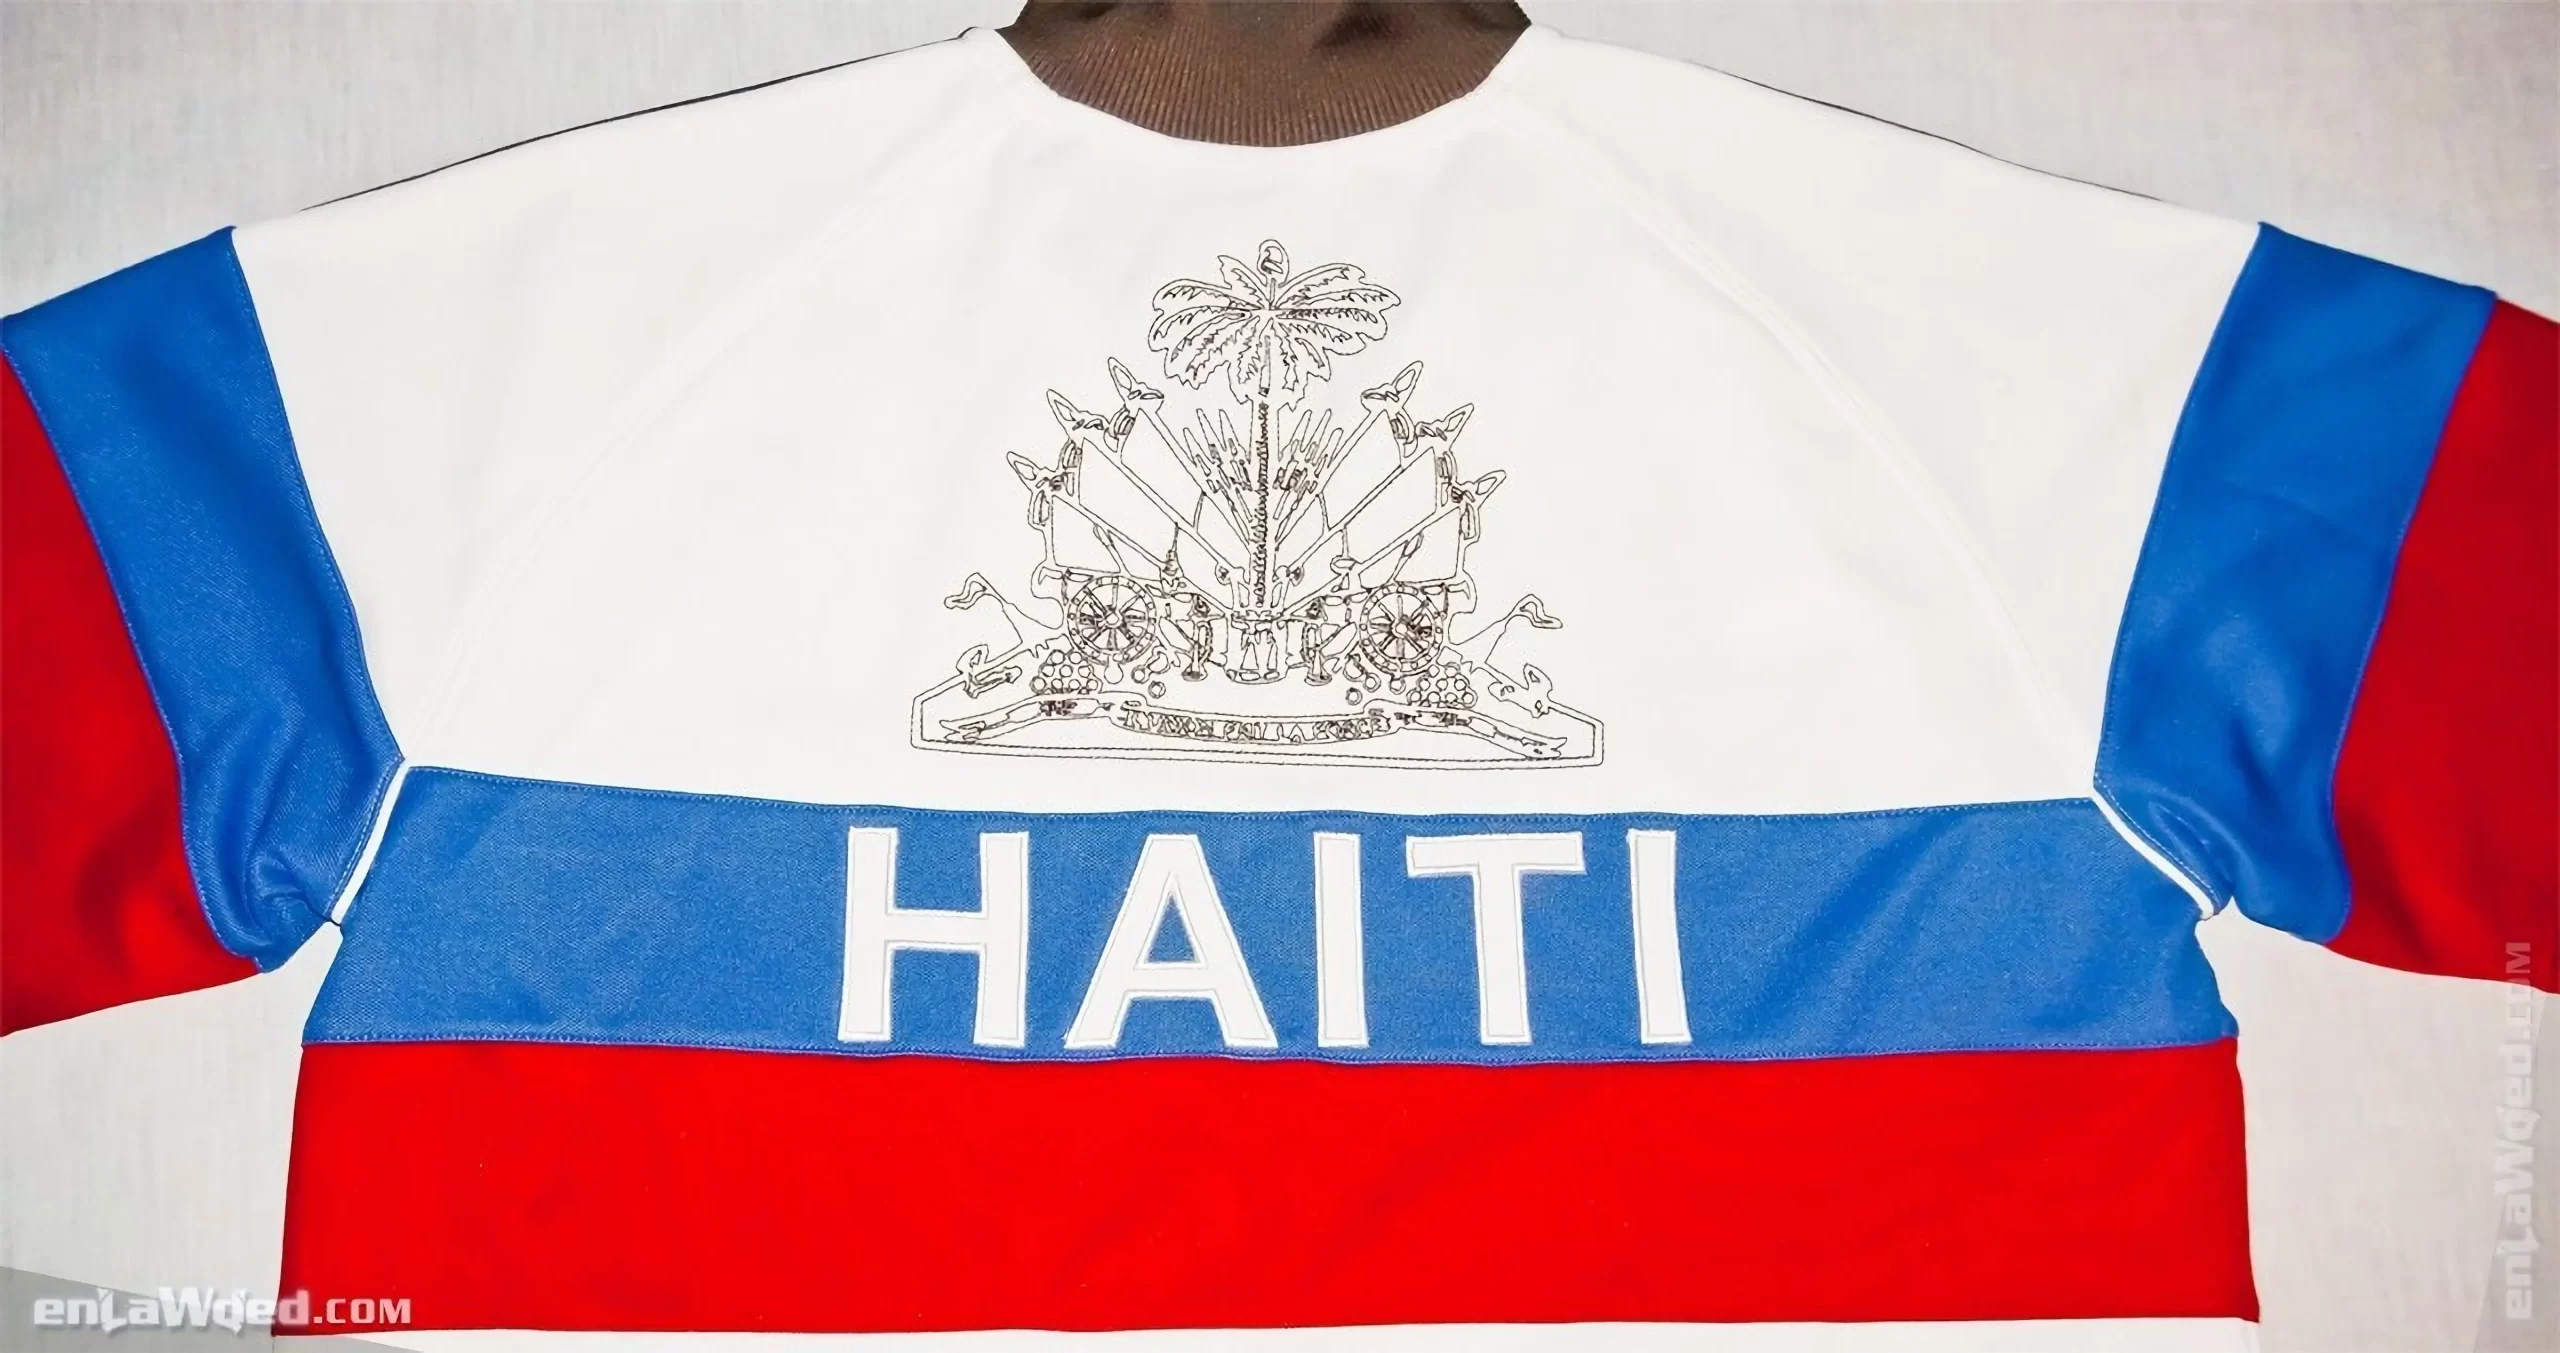 Men’s 2010 Haiti Track Top by Adidas Originals: Radiant (EnLawded.com file #lmchk90059ip2y121760kg9st)